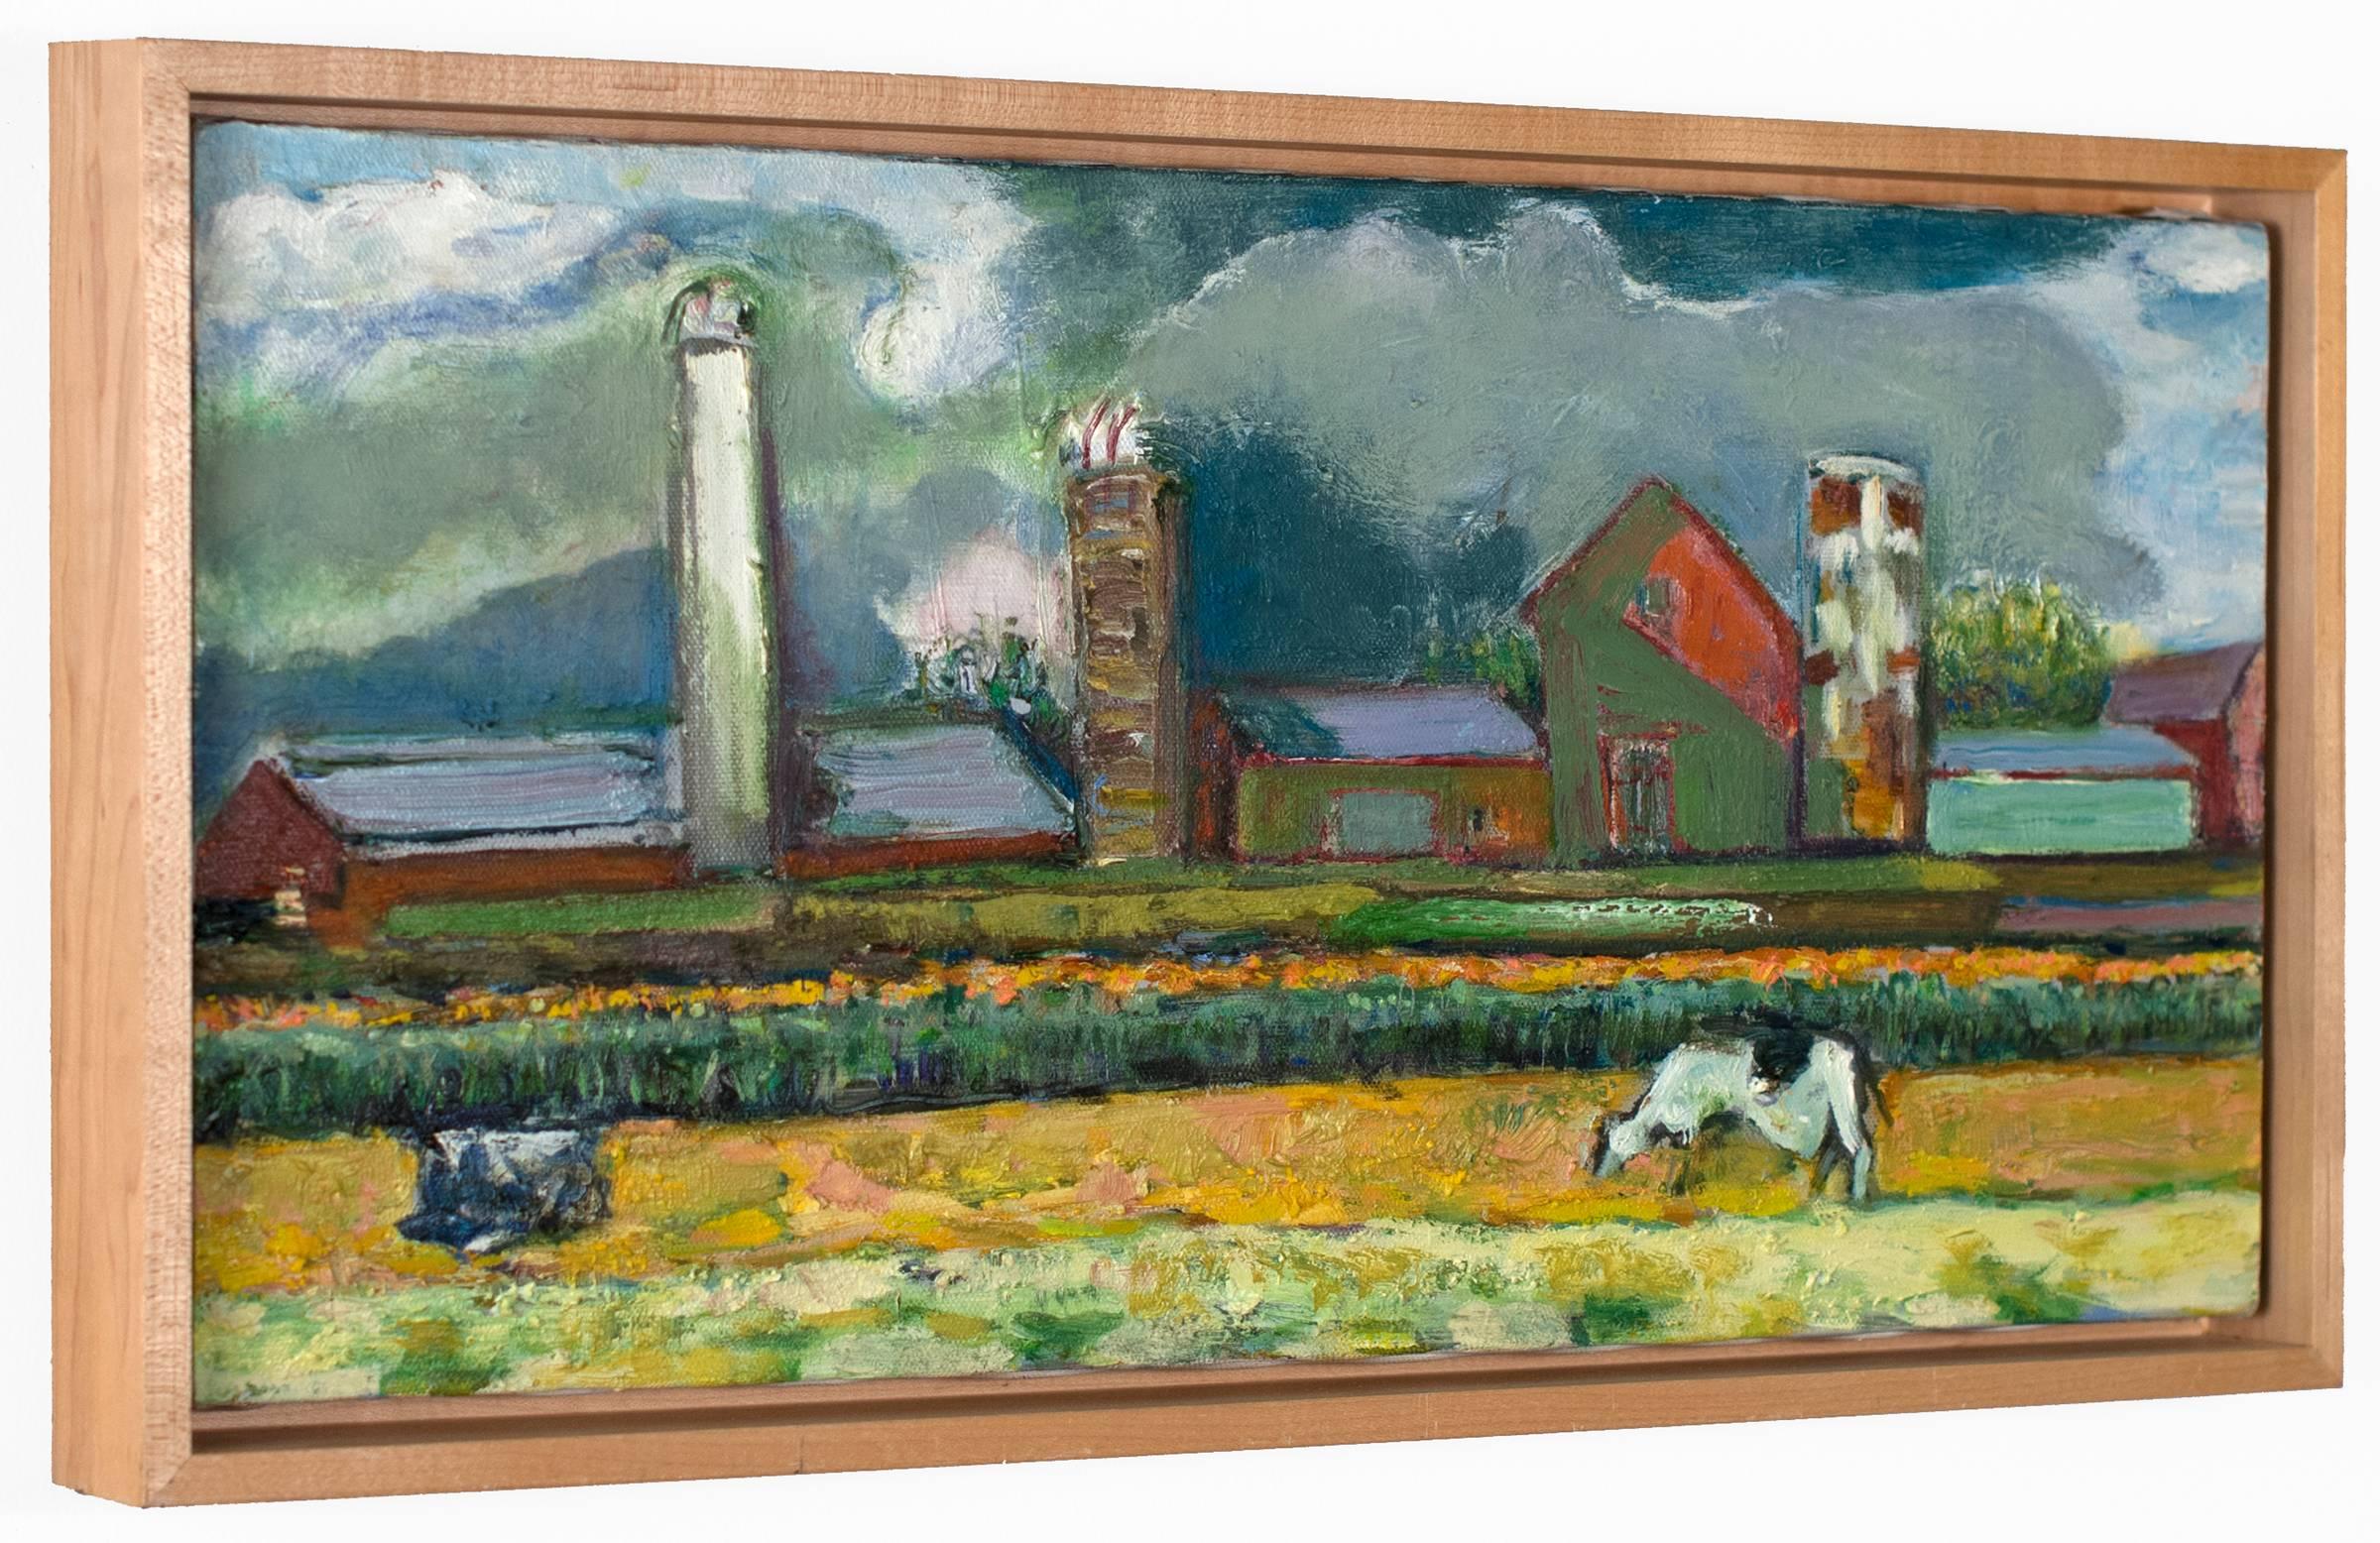 The Farm - Painting by Bernard Chaet